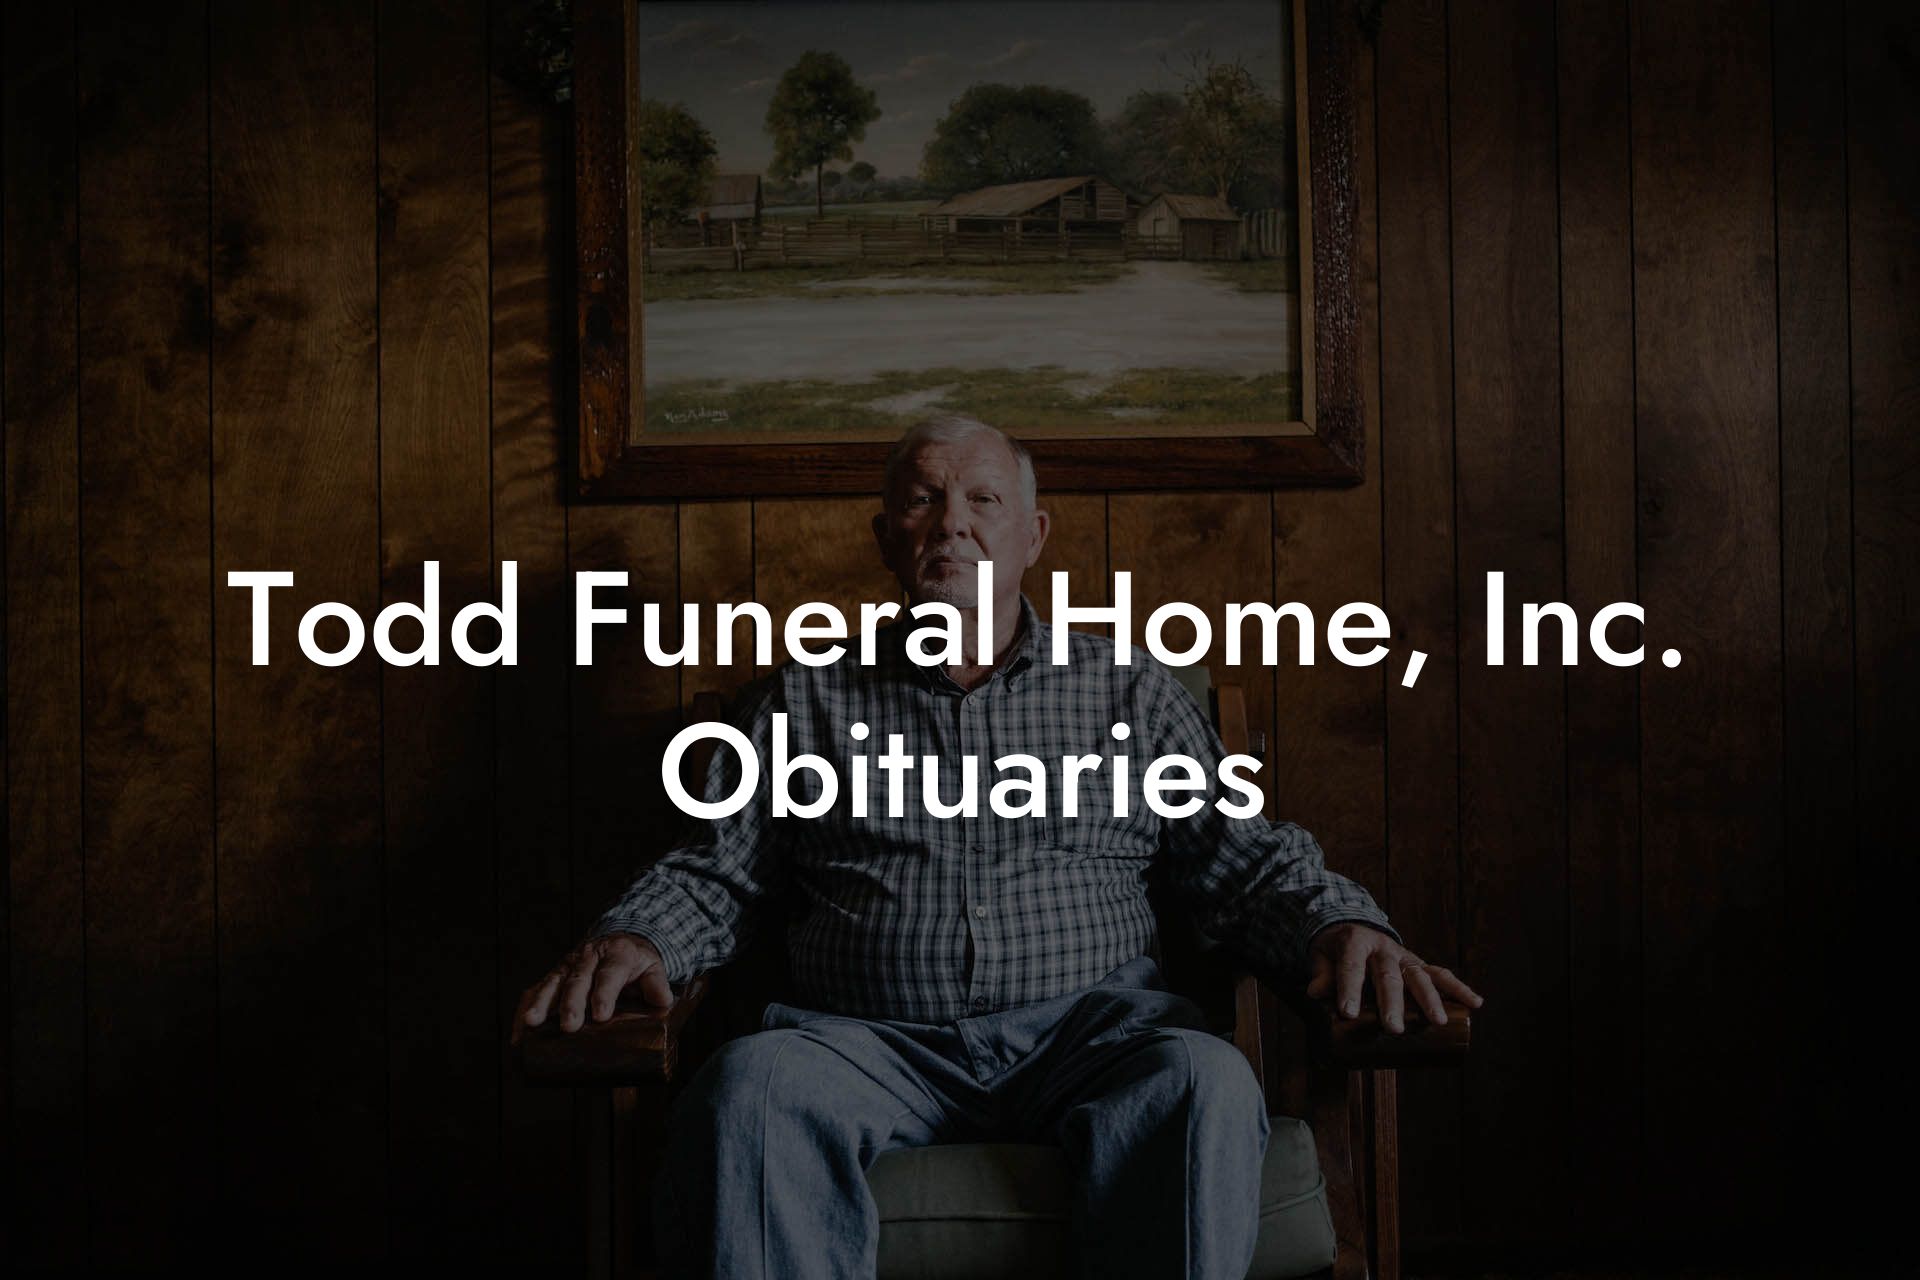 Todd Funeral Home, Inc. Obituaries